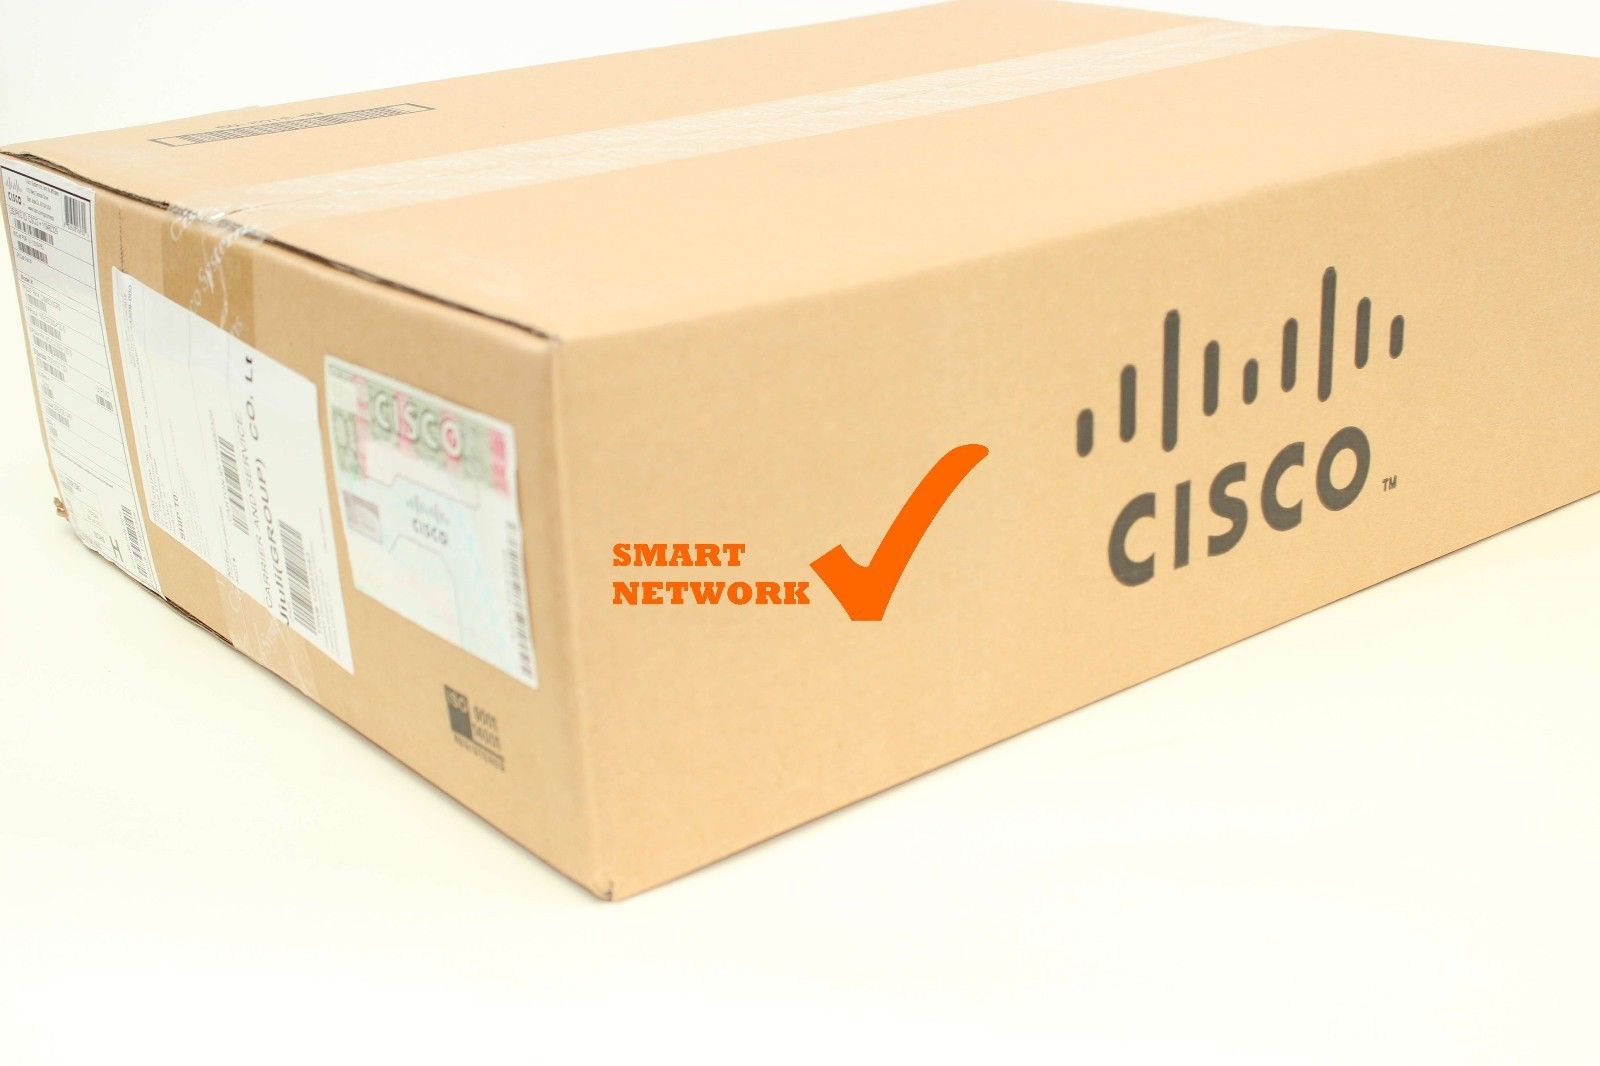 NEW Cisco NIM-8MFT-1T1/E1 Multi-flex Trunk Voice Card FAST S NIM-8MFT-1T1/E1